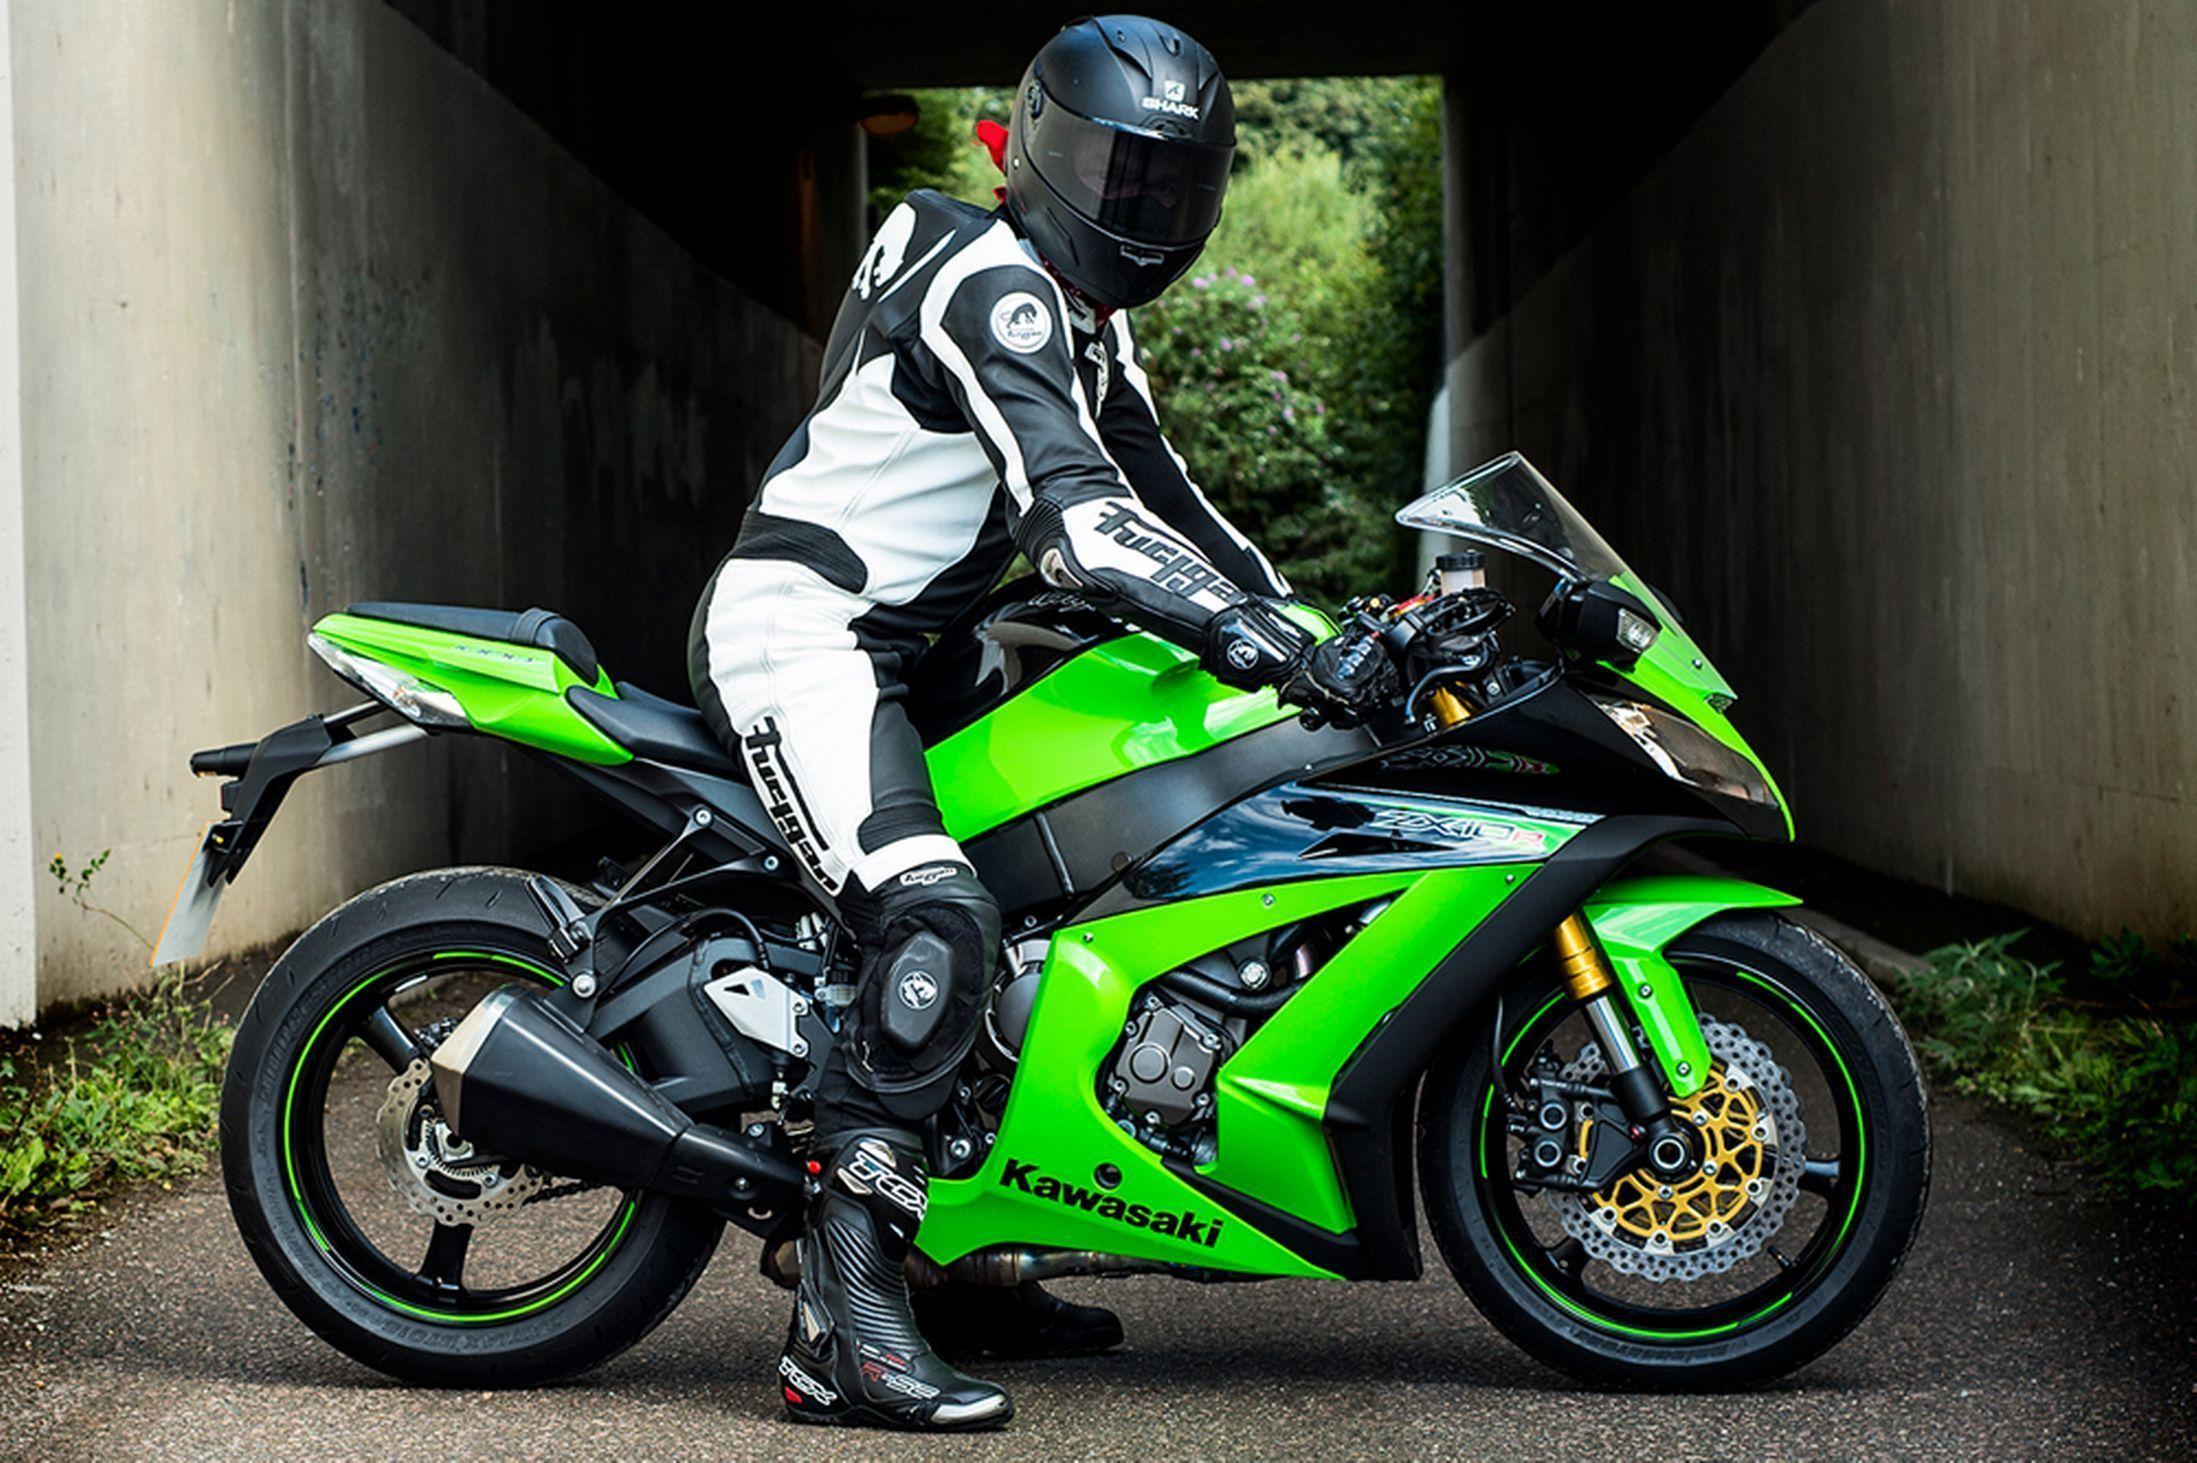 Green Ninja Zx10r HD Wallpaper with Rider. Motorcycling